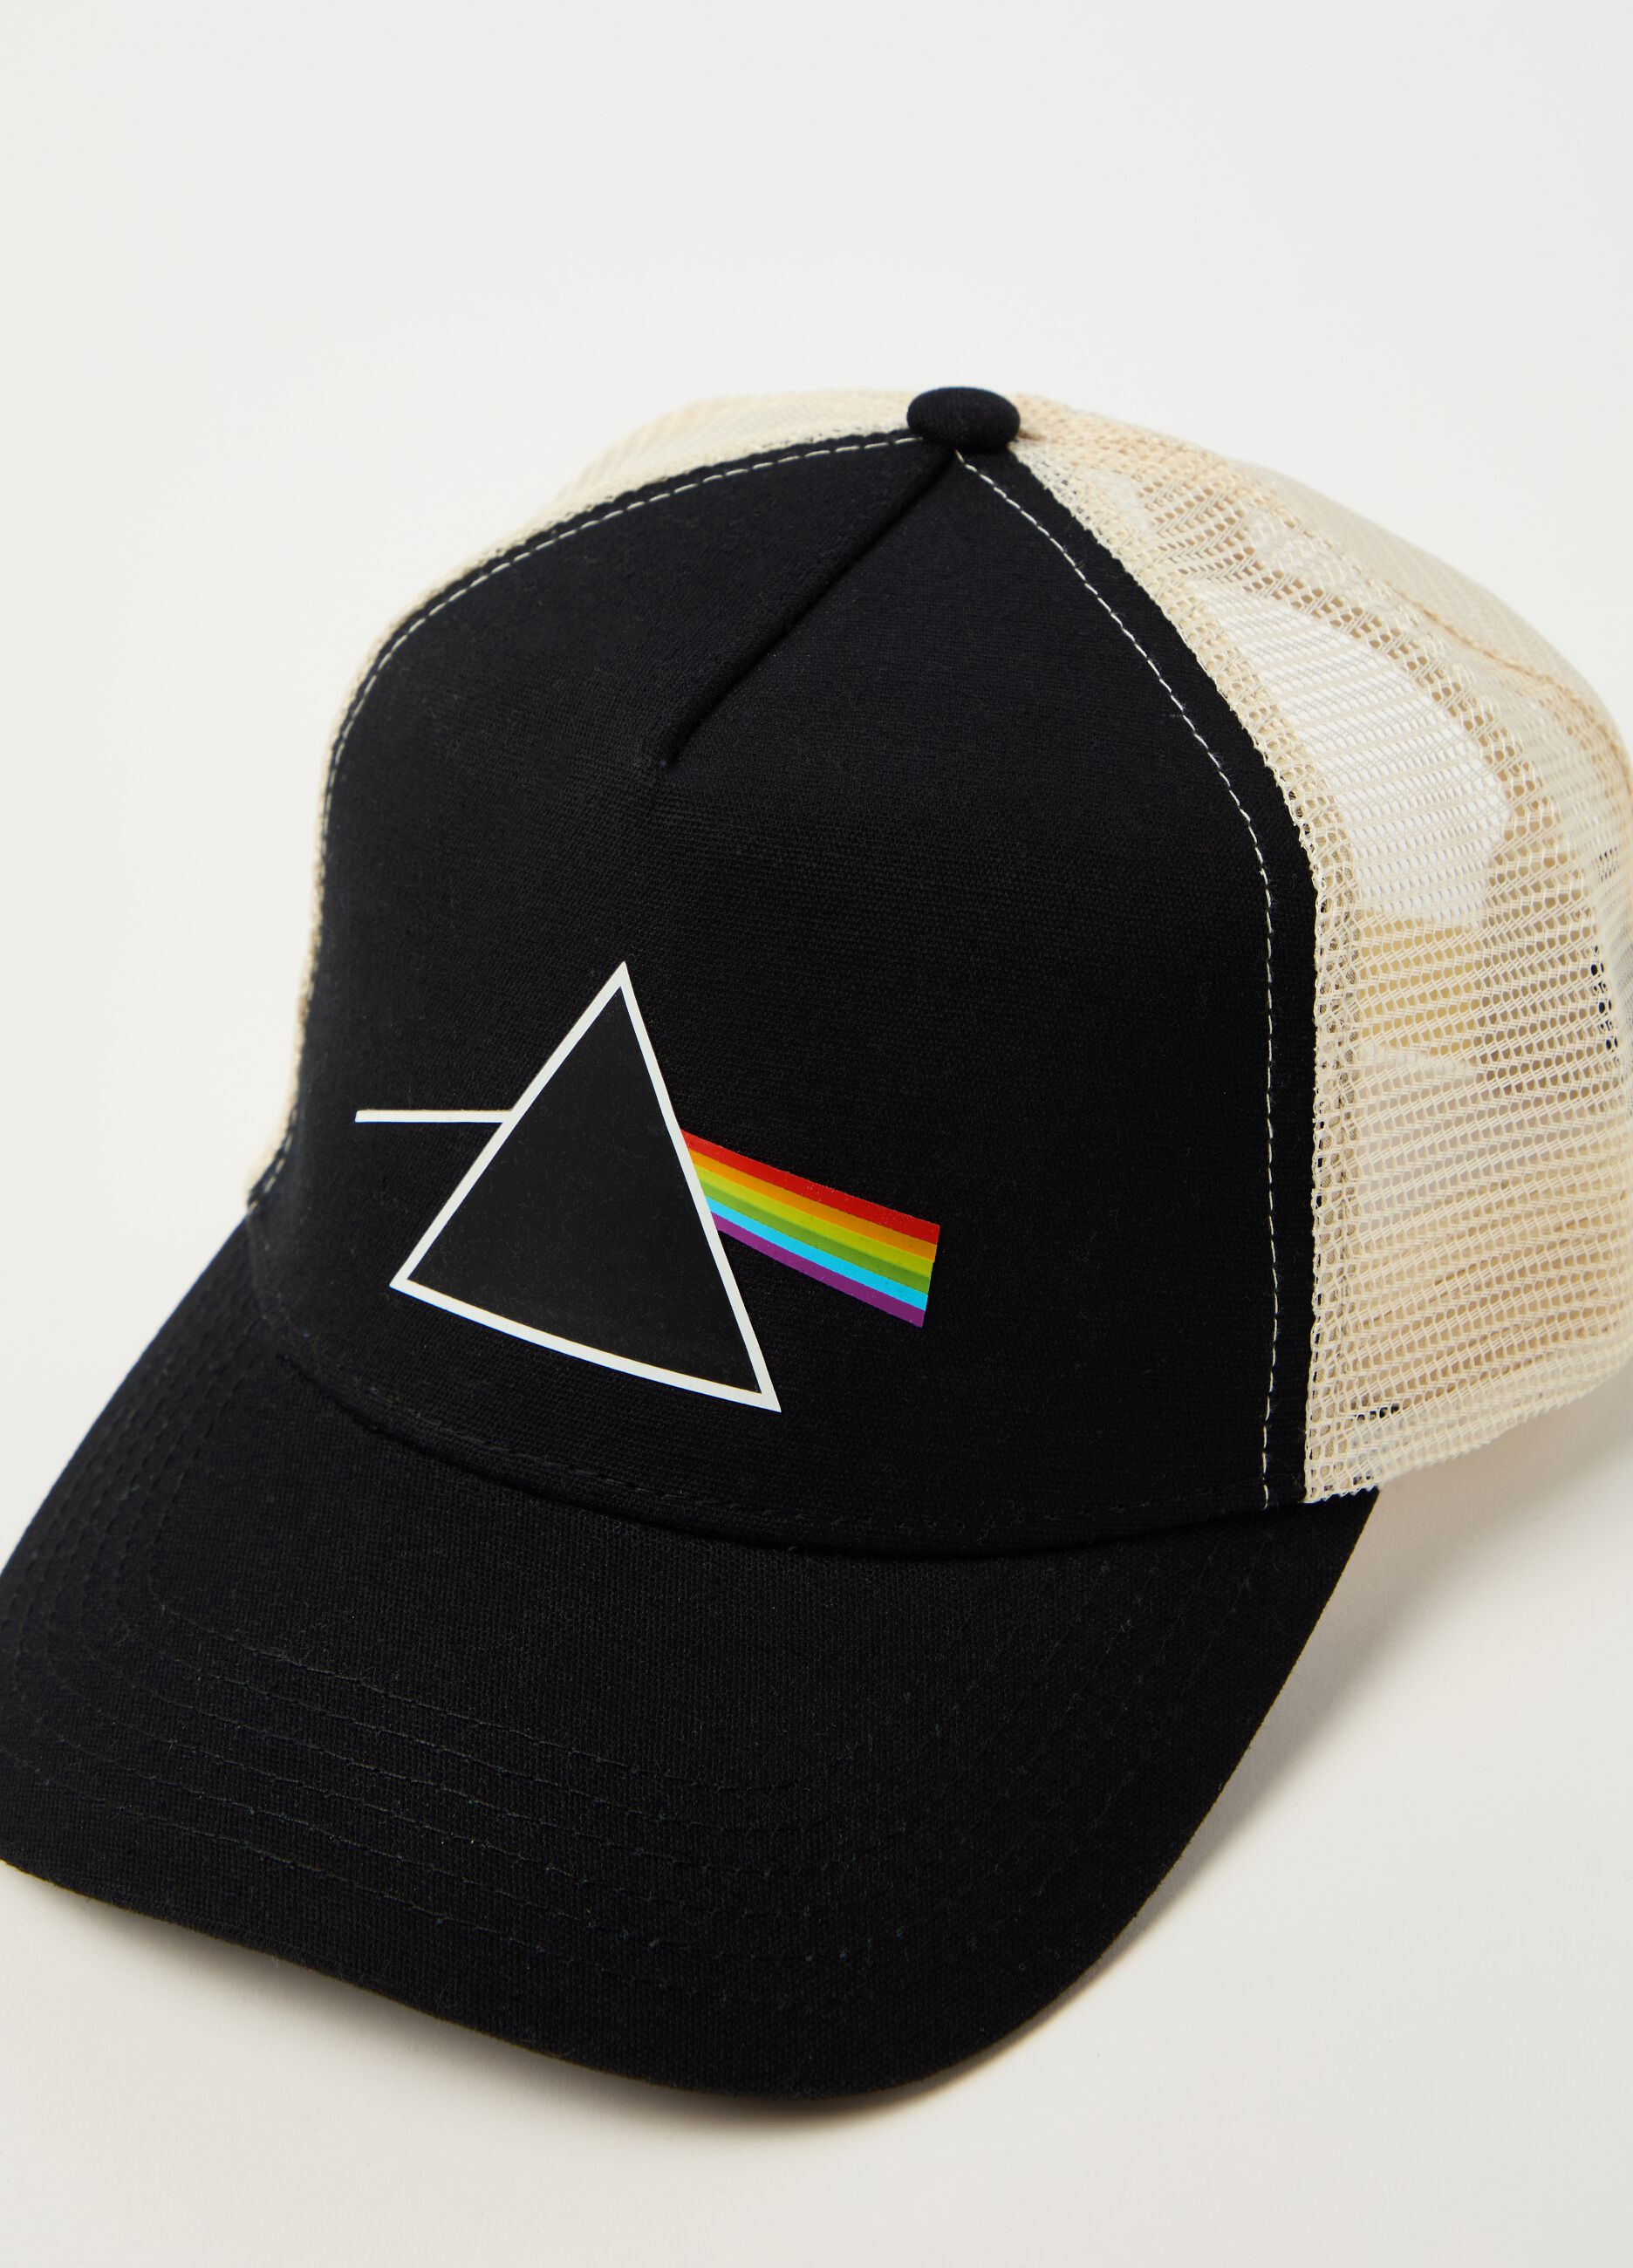 Baseball cap with Pink Floyd print